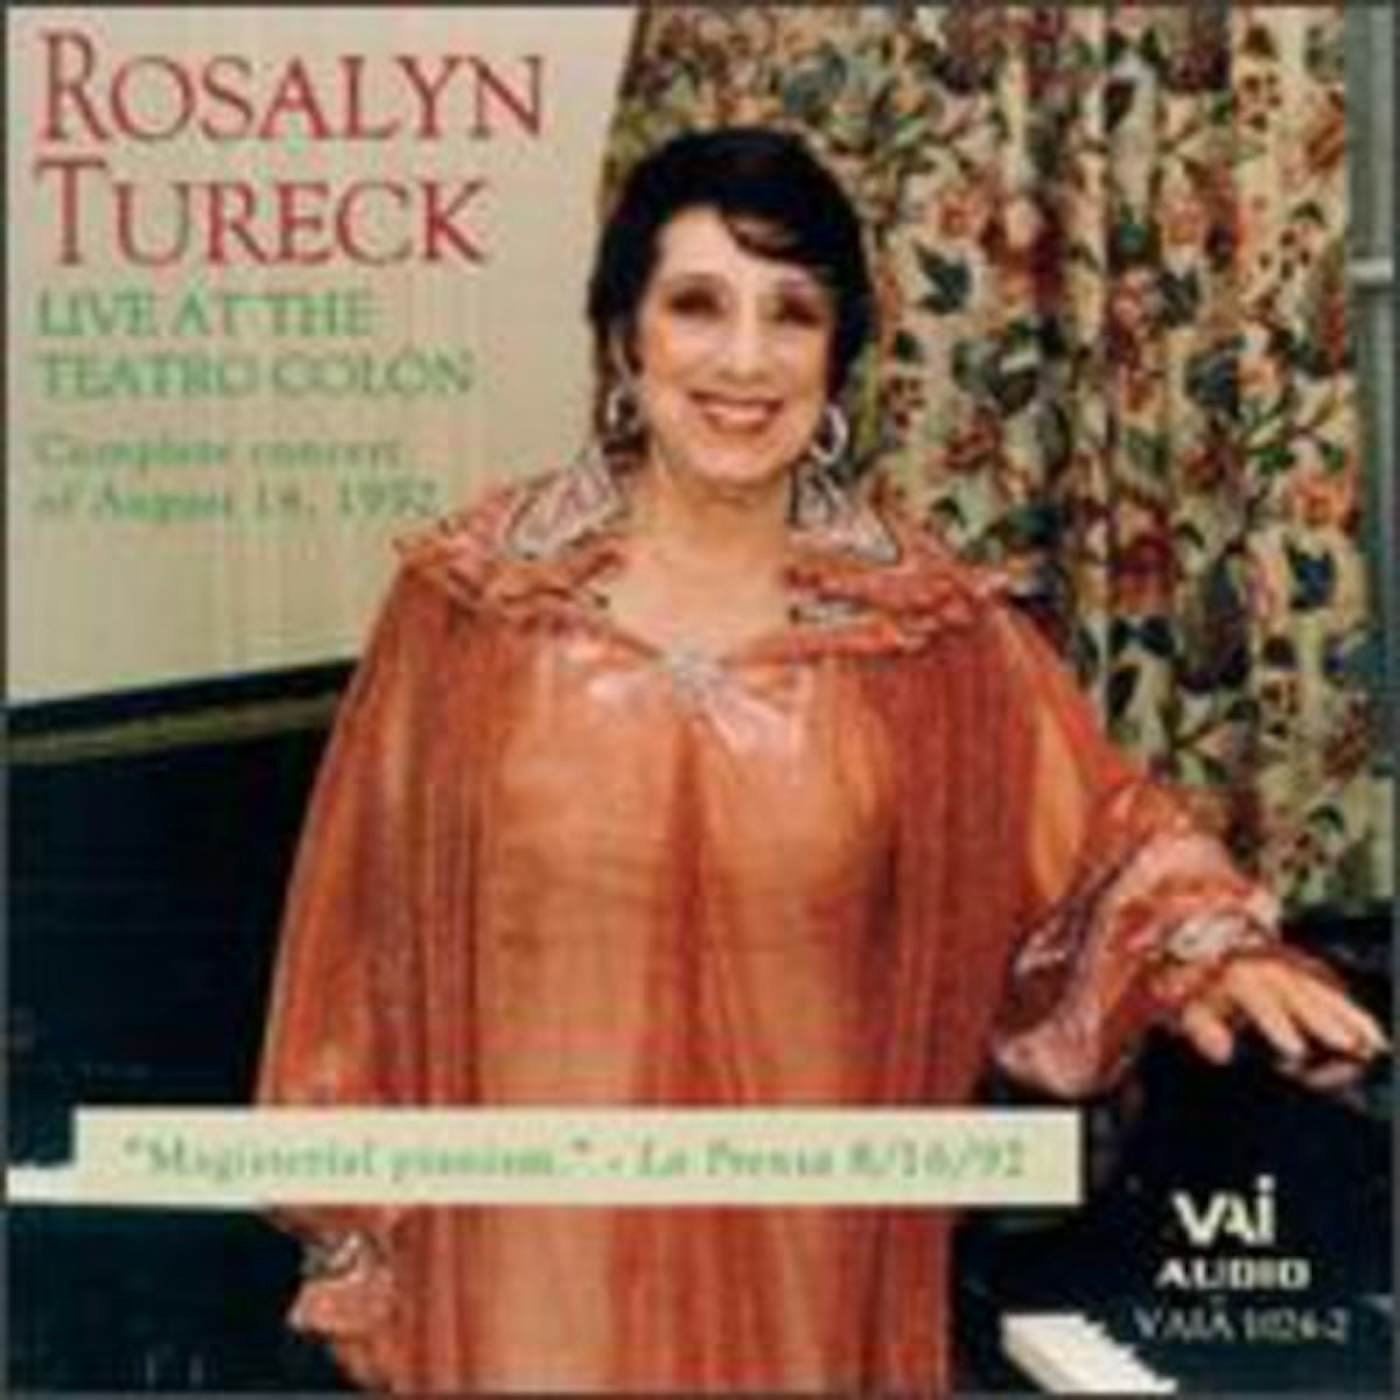 Rosalyn Tureck LIVE AT TEATRO COLON CD